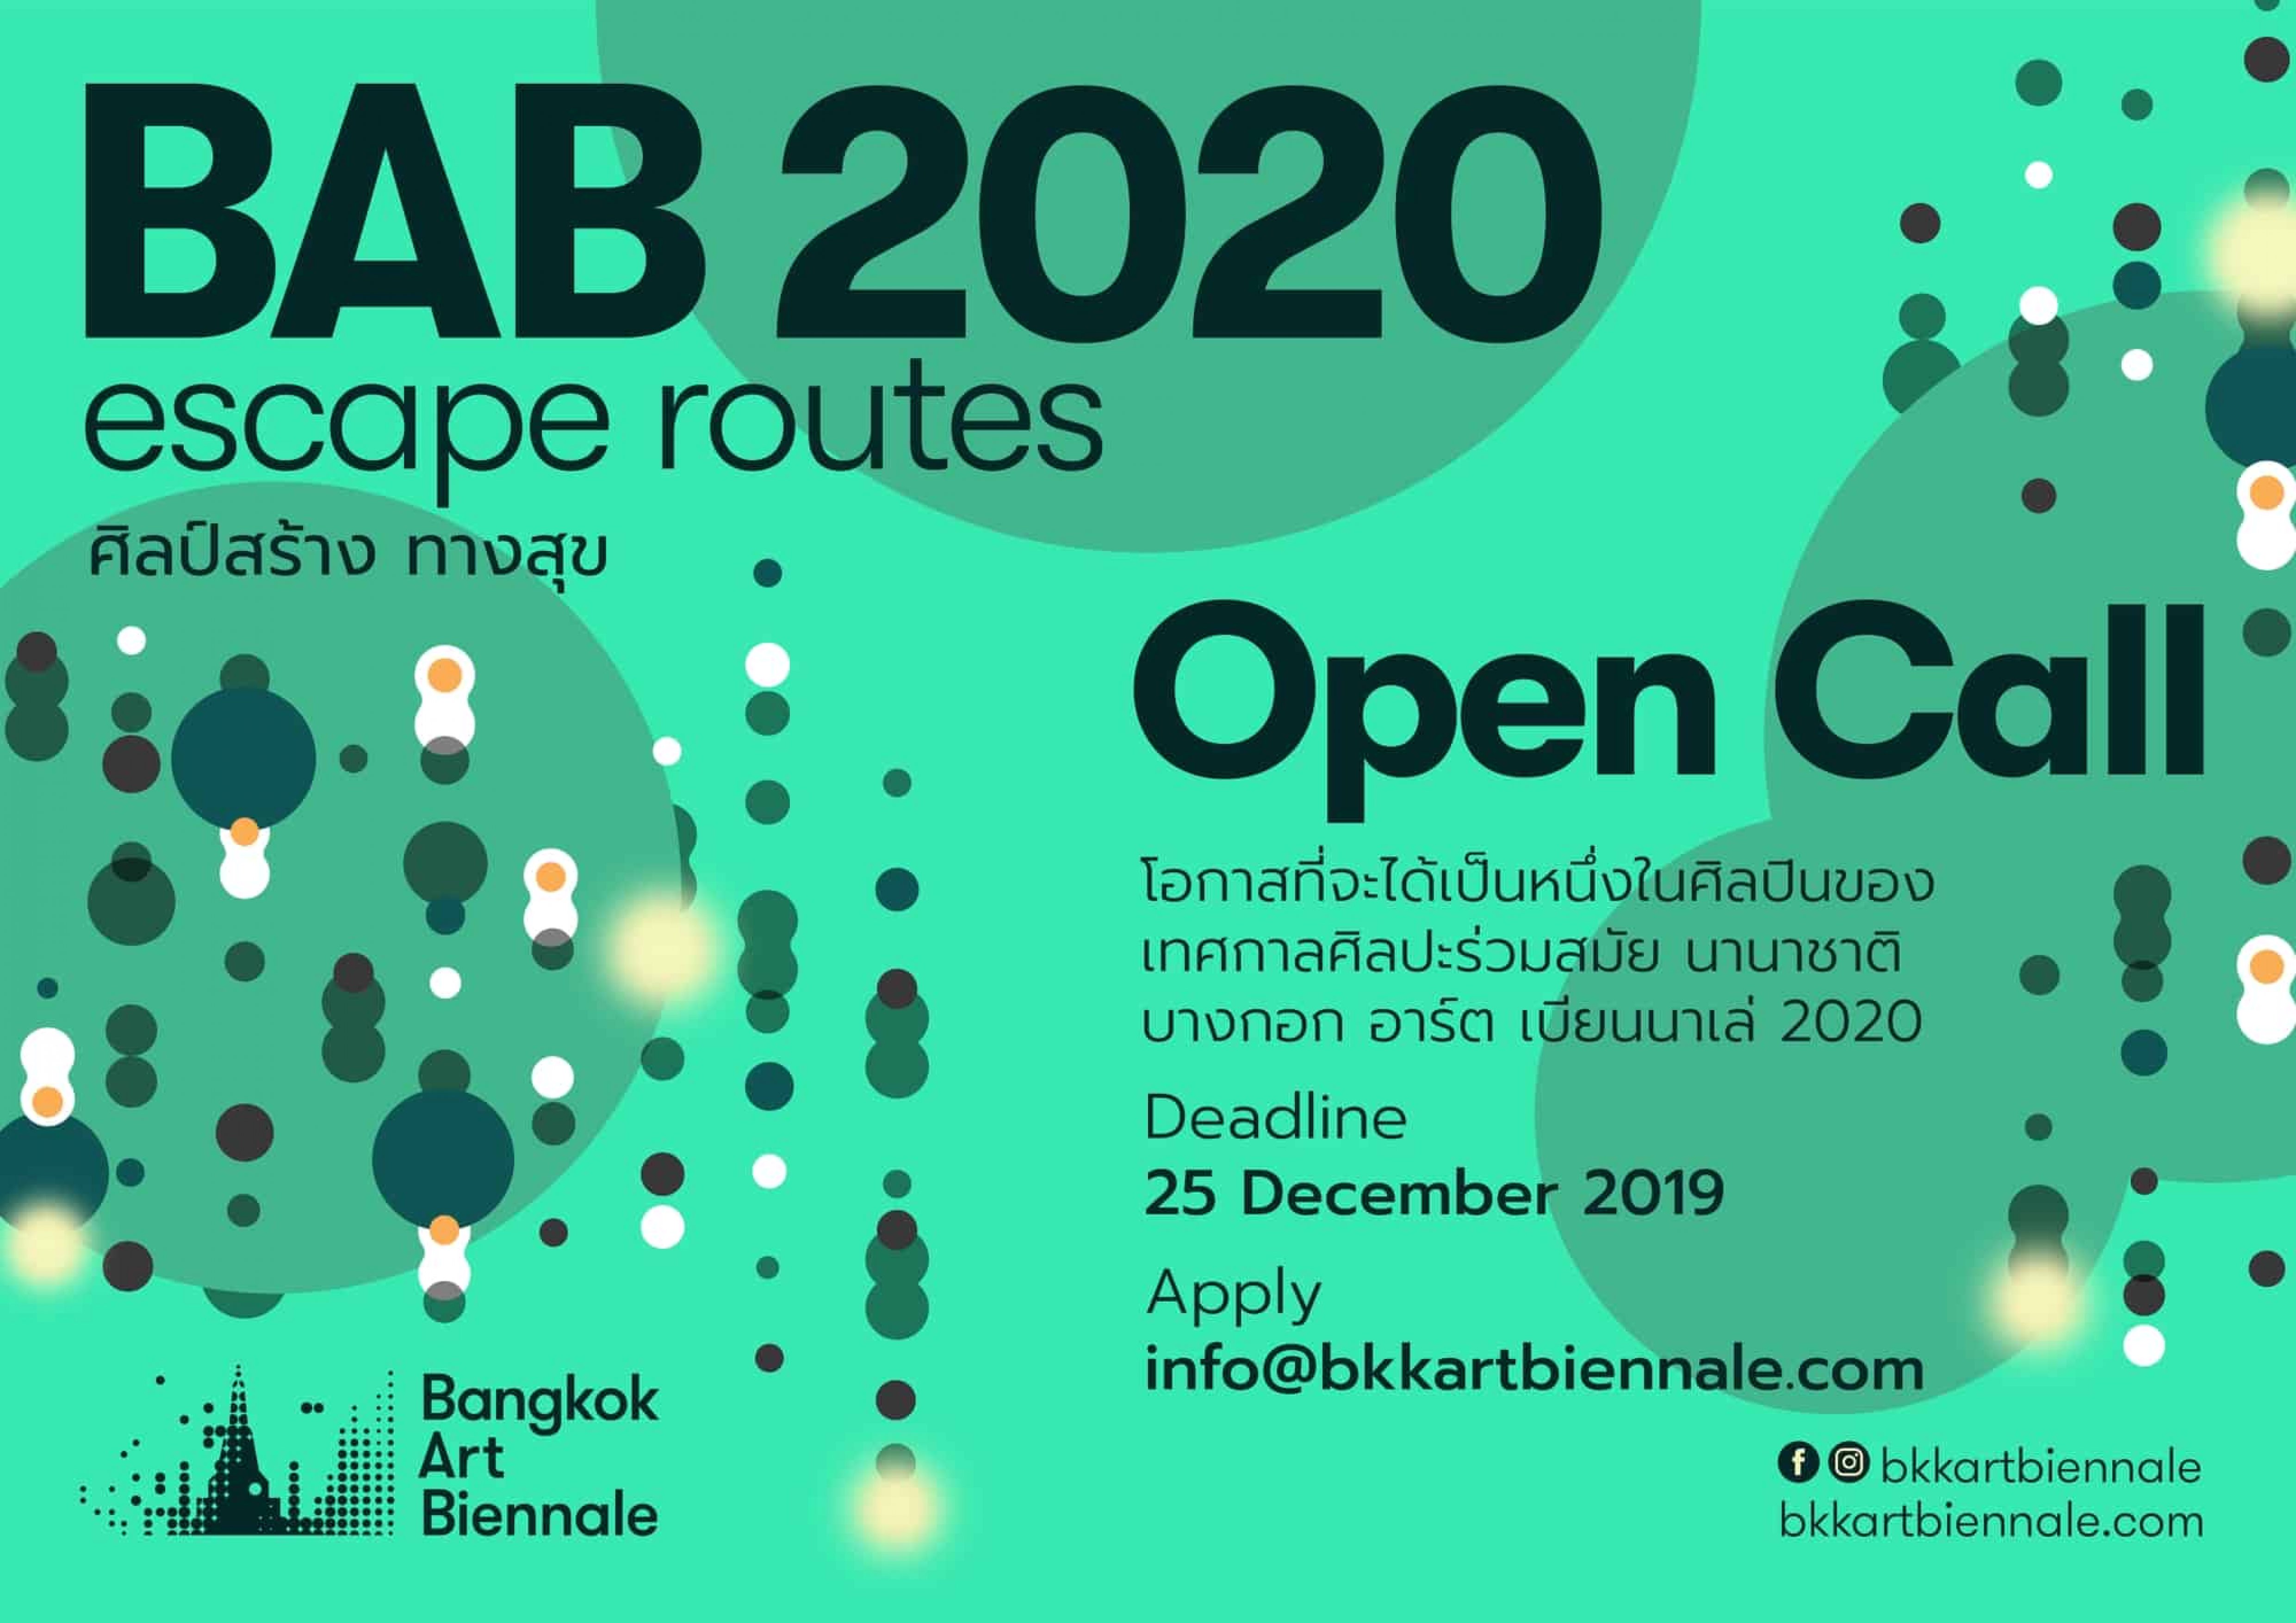 Open Call BAB 2020 Application